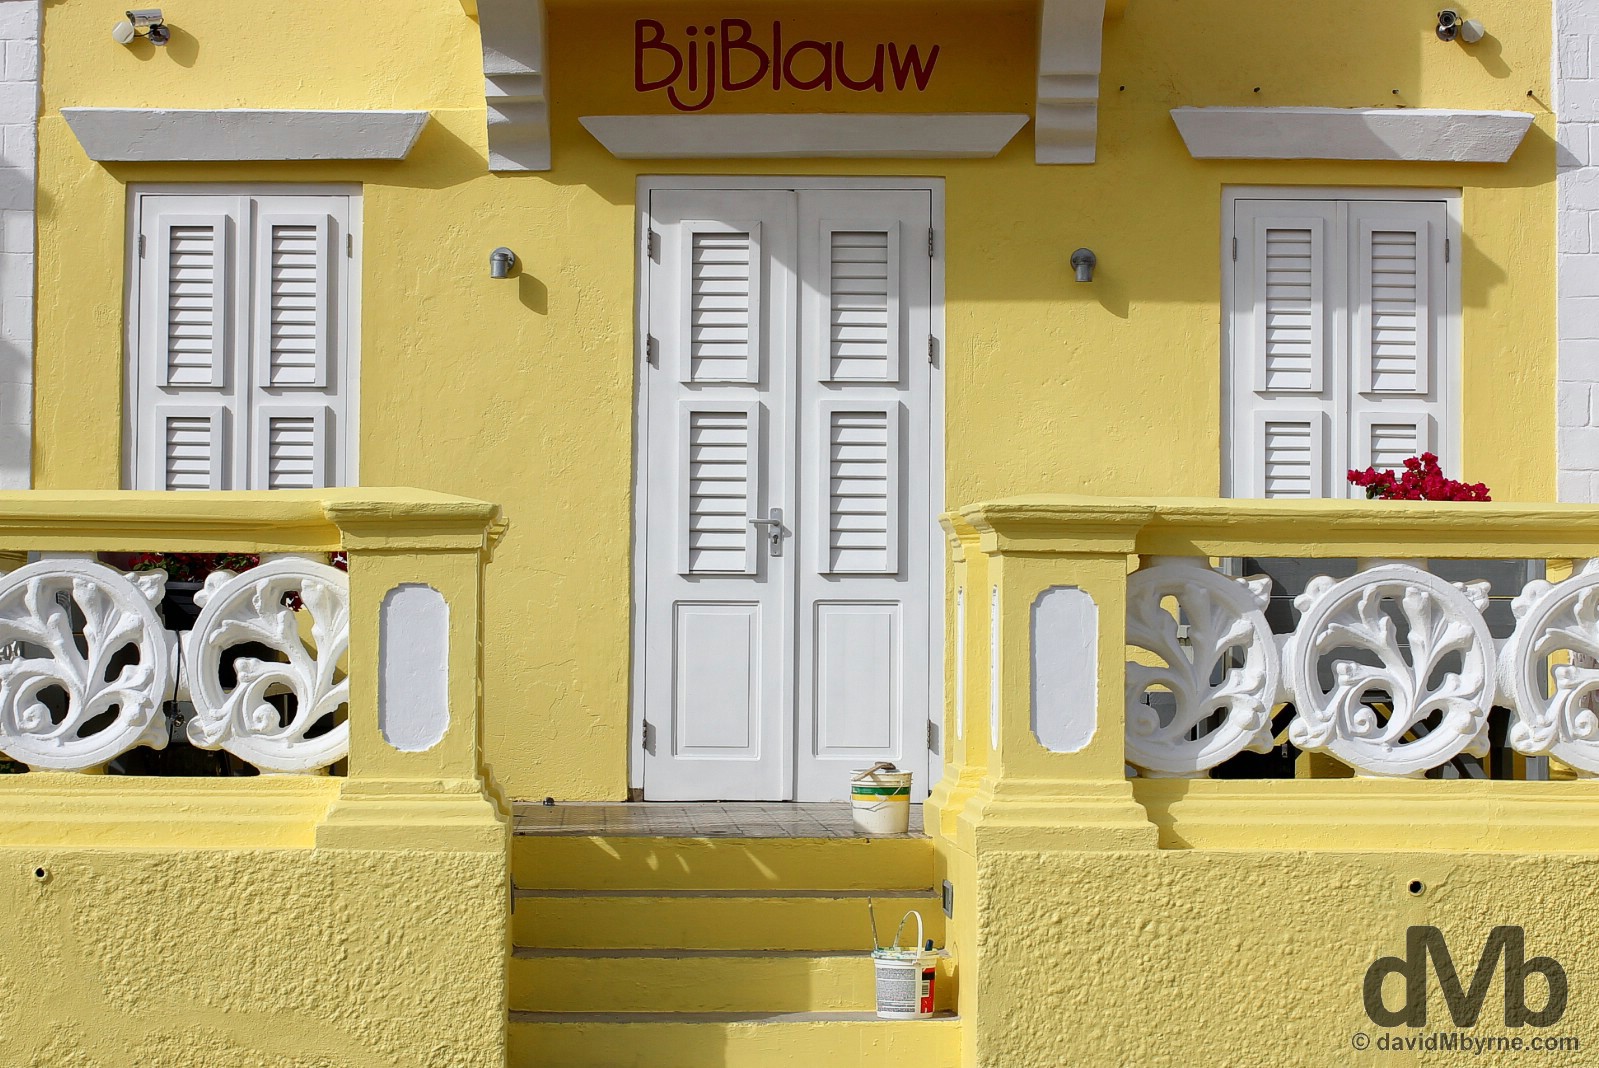 BijBlauw, Kaya Wilson Godett, Willemstad, Curacao, Lesser Antilles. June 20, 2015.